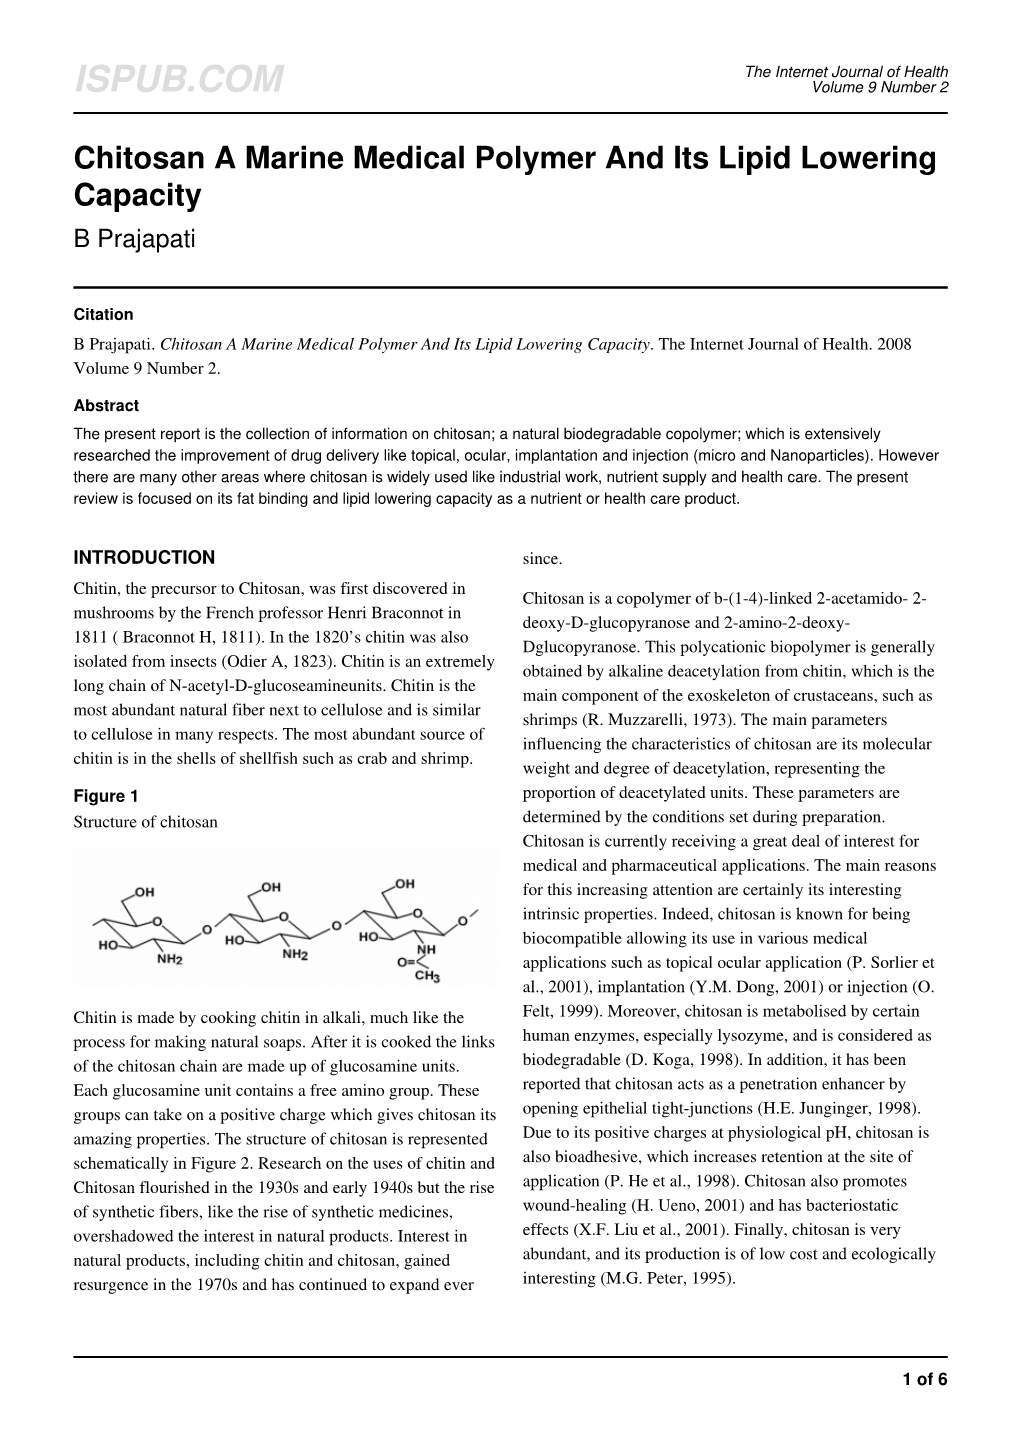 Chitosan a Marine Medical Polymer and Its Lipid Lowering Capacity B Prajapati